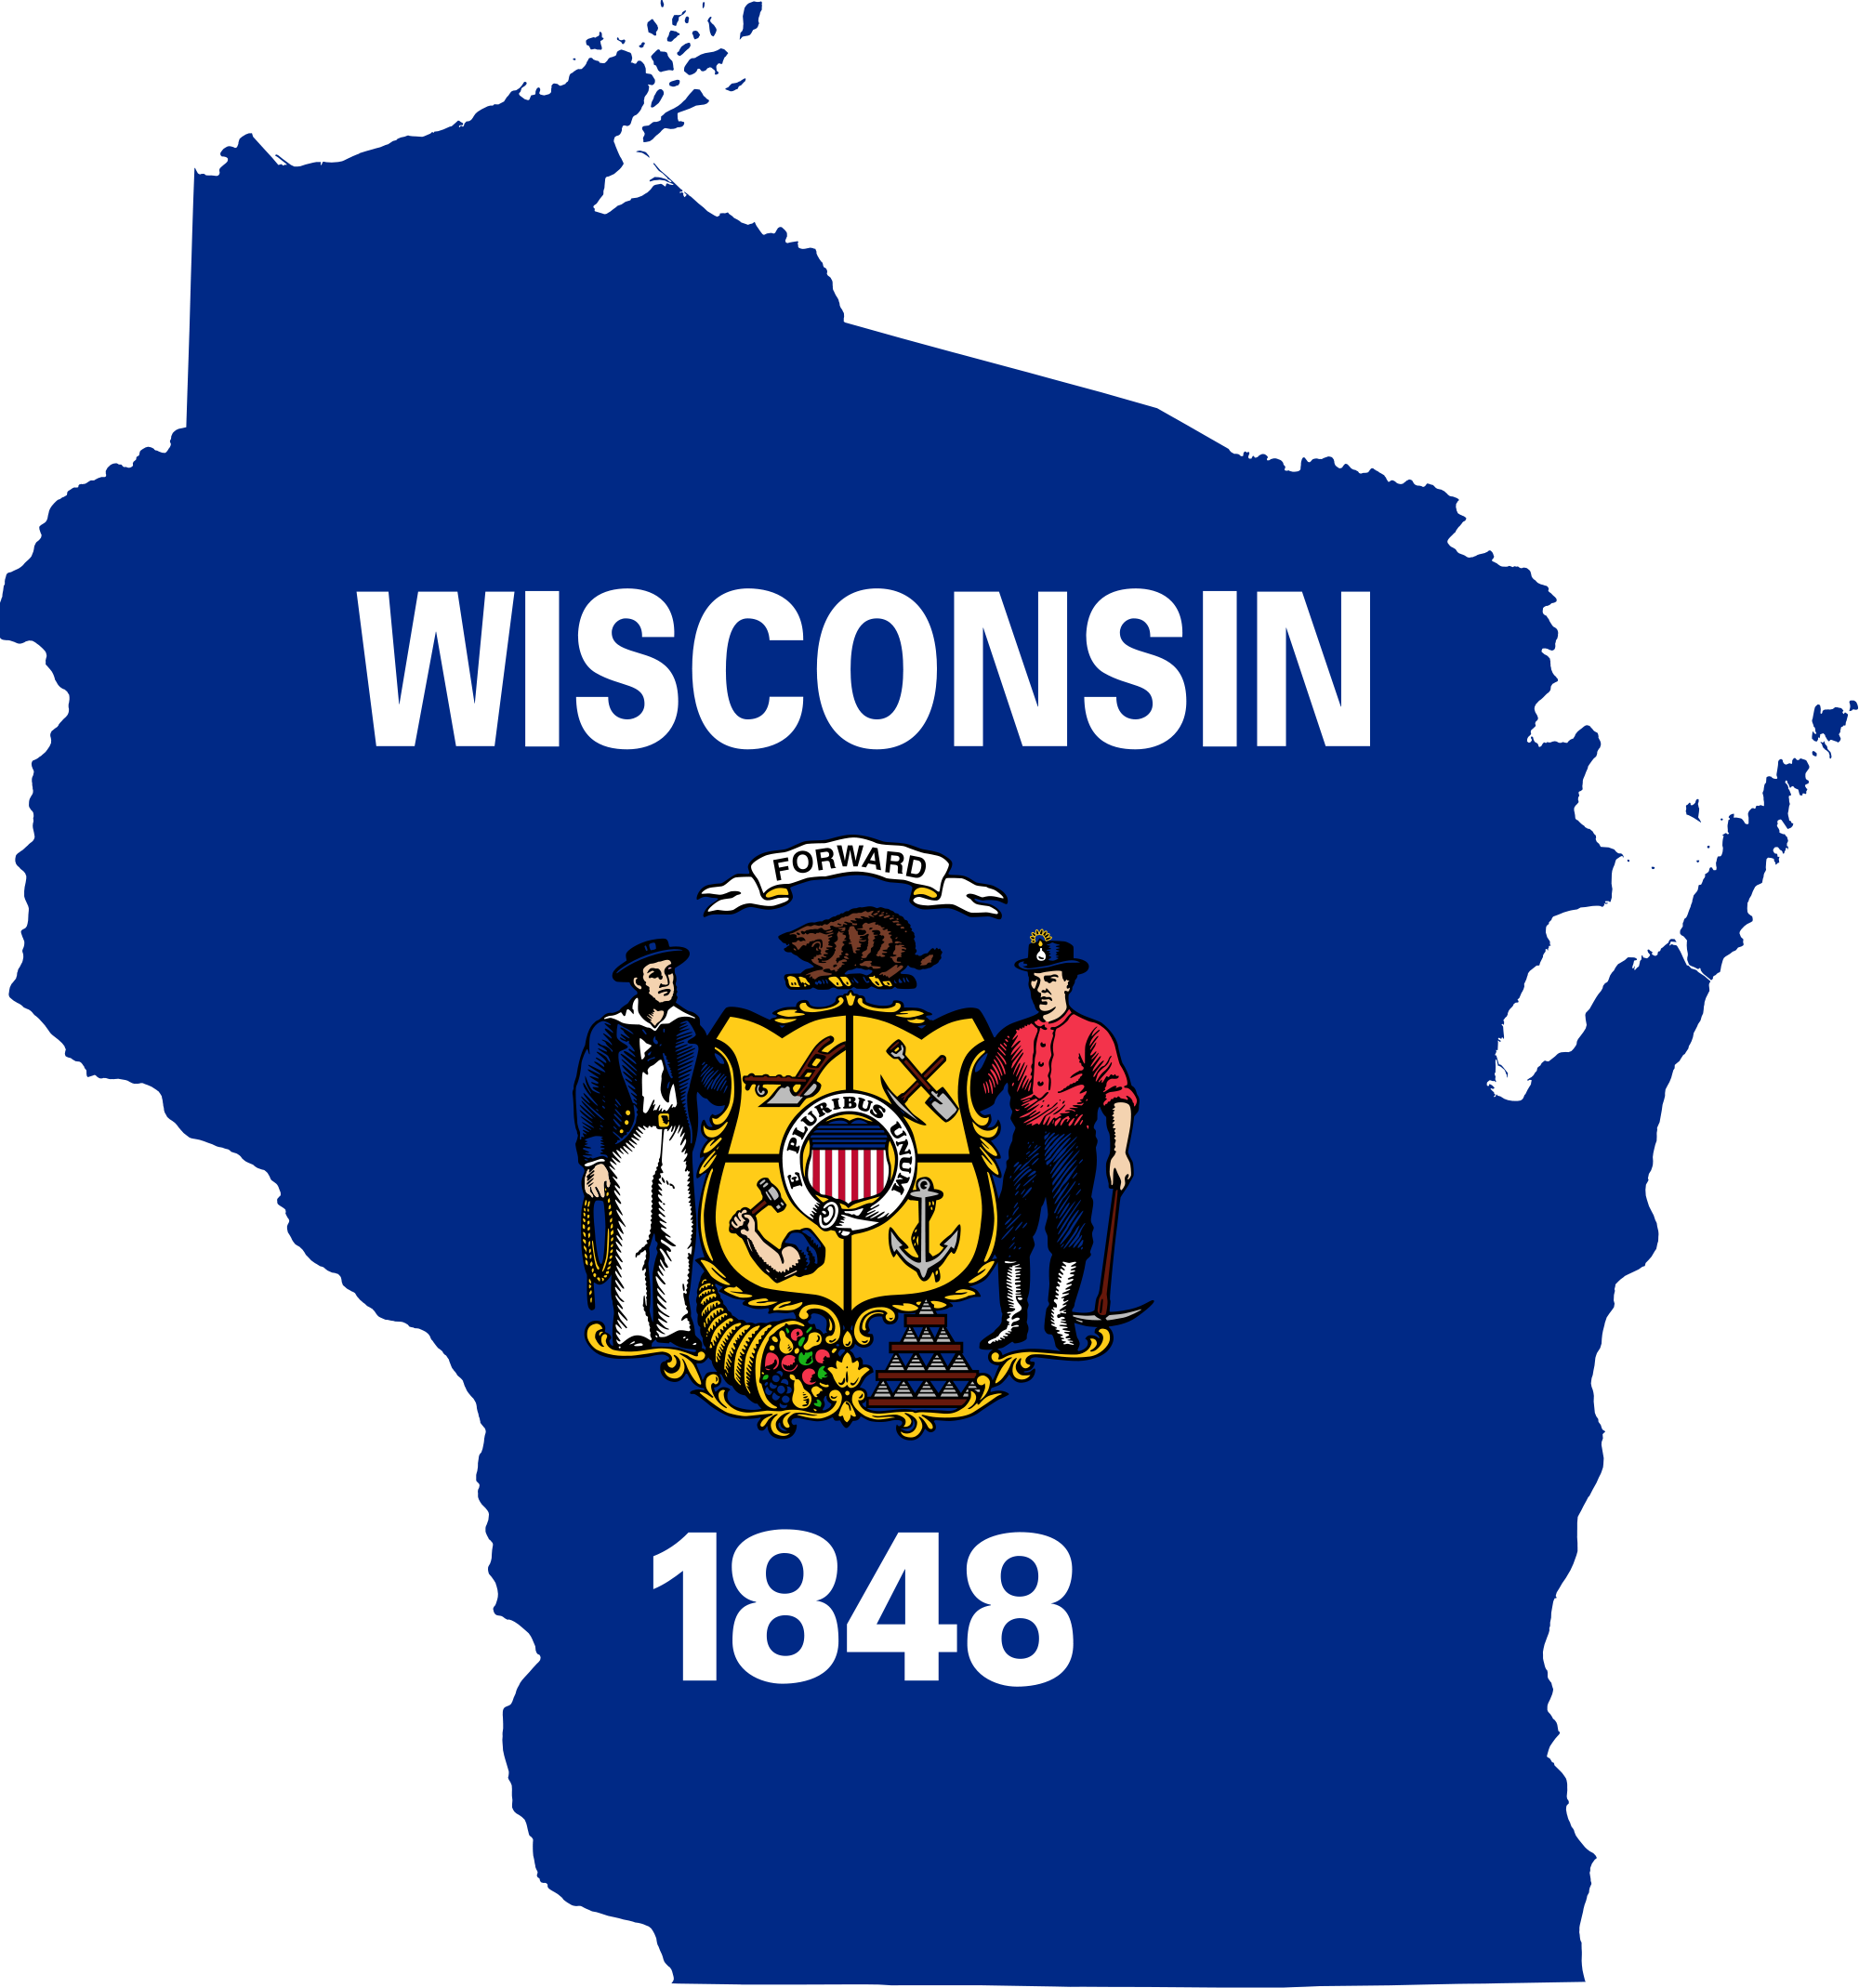 Wisconsin photo